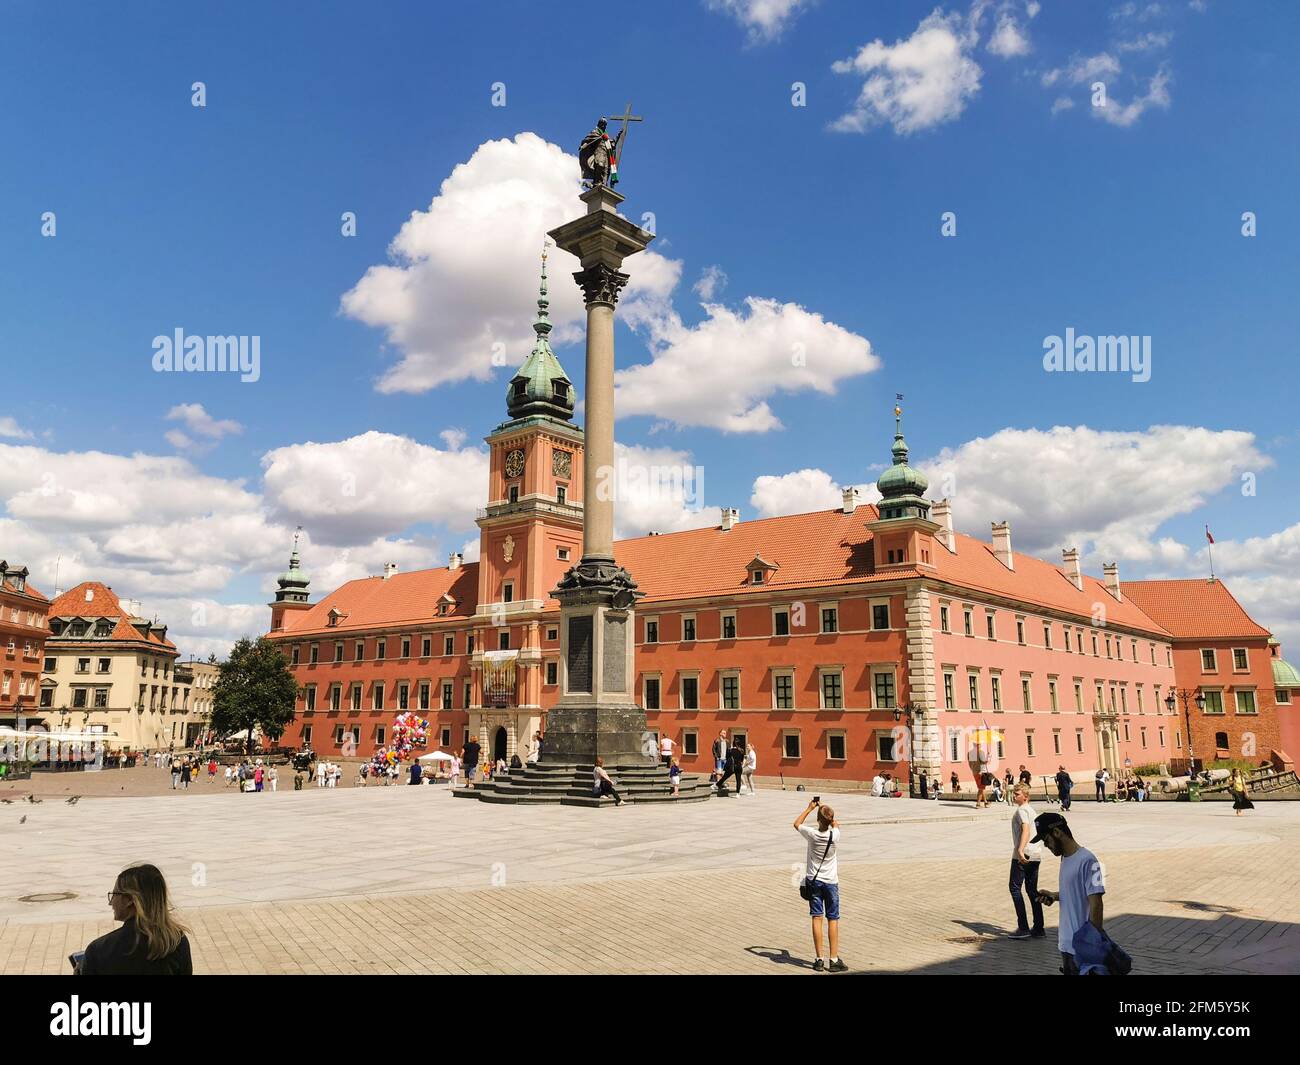 Warsaw, Poland: Old town in Warsaw, Poland. The Royal Castle and Sigismund's Column called Kolumna Zygmunta, Plac Zamkowy horizontal photo Stock Photo